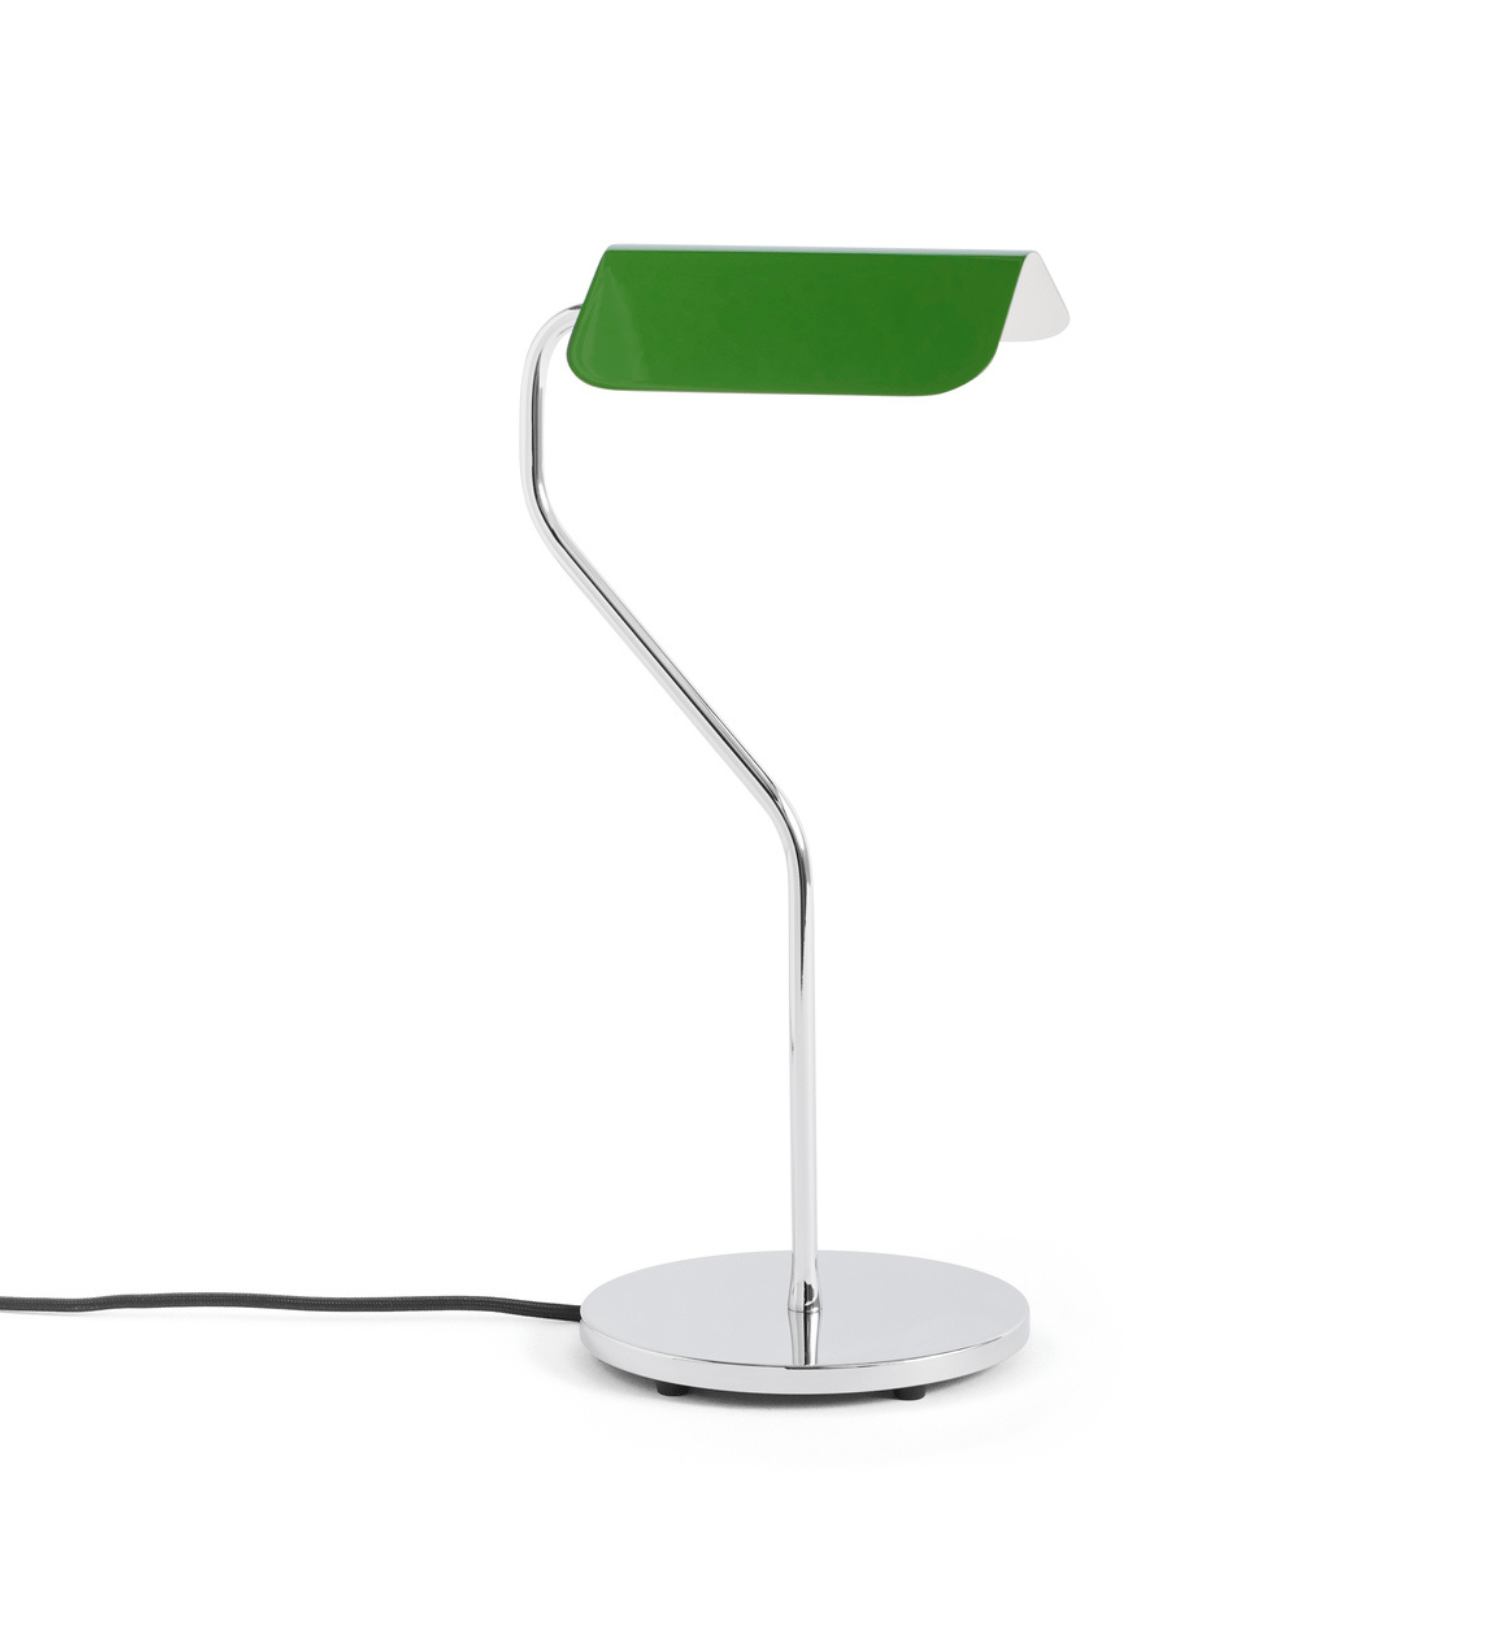 Lampa stołowa Apex Table Lamp marki hay